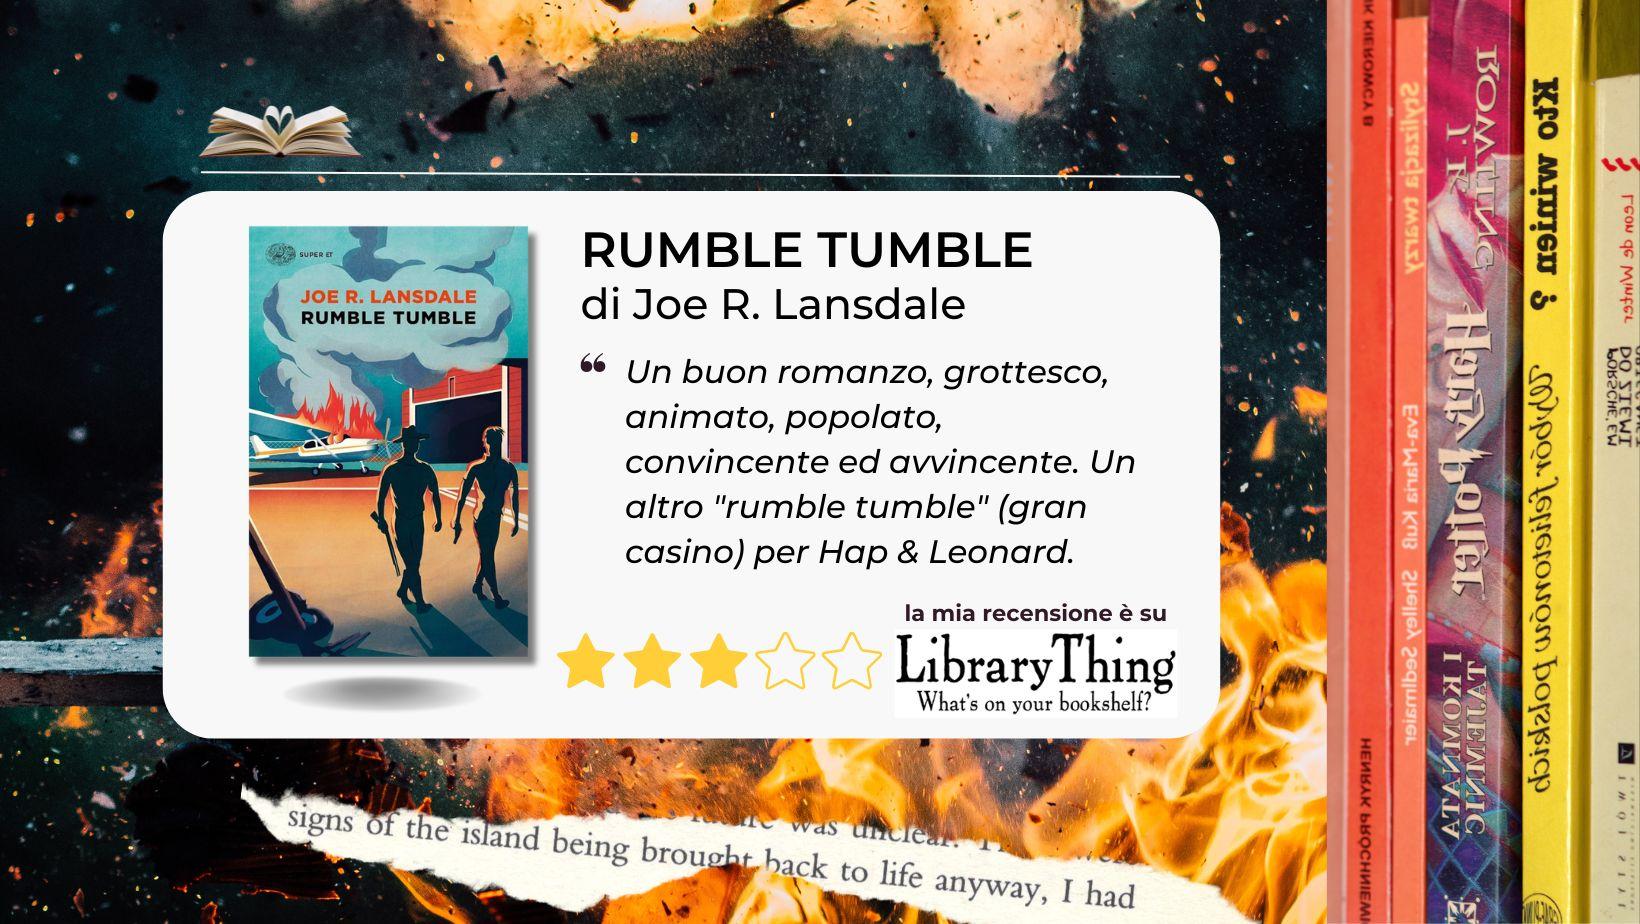 Quinta avventura per Hap & Leonard. "Ruble Tumble" dalla penna di Joe R. Lansdale